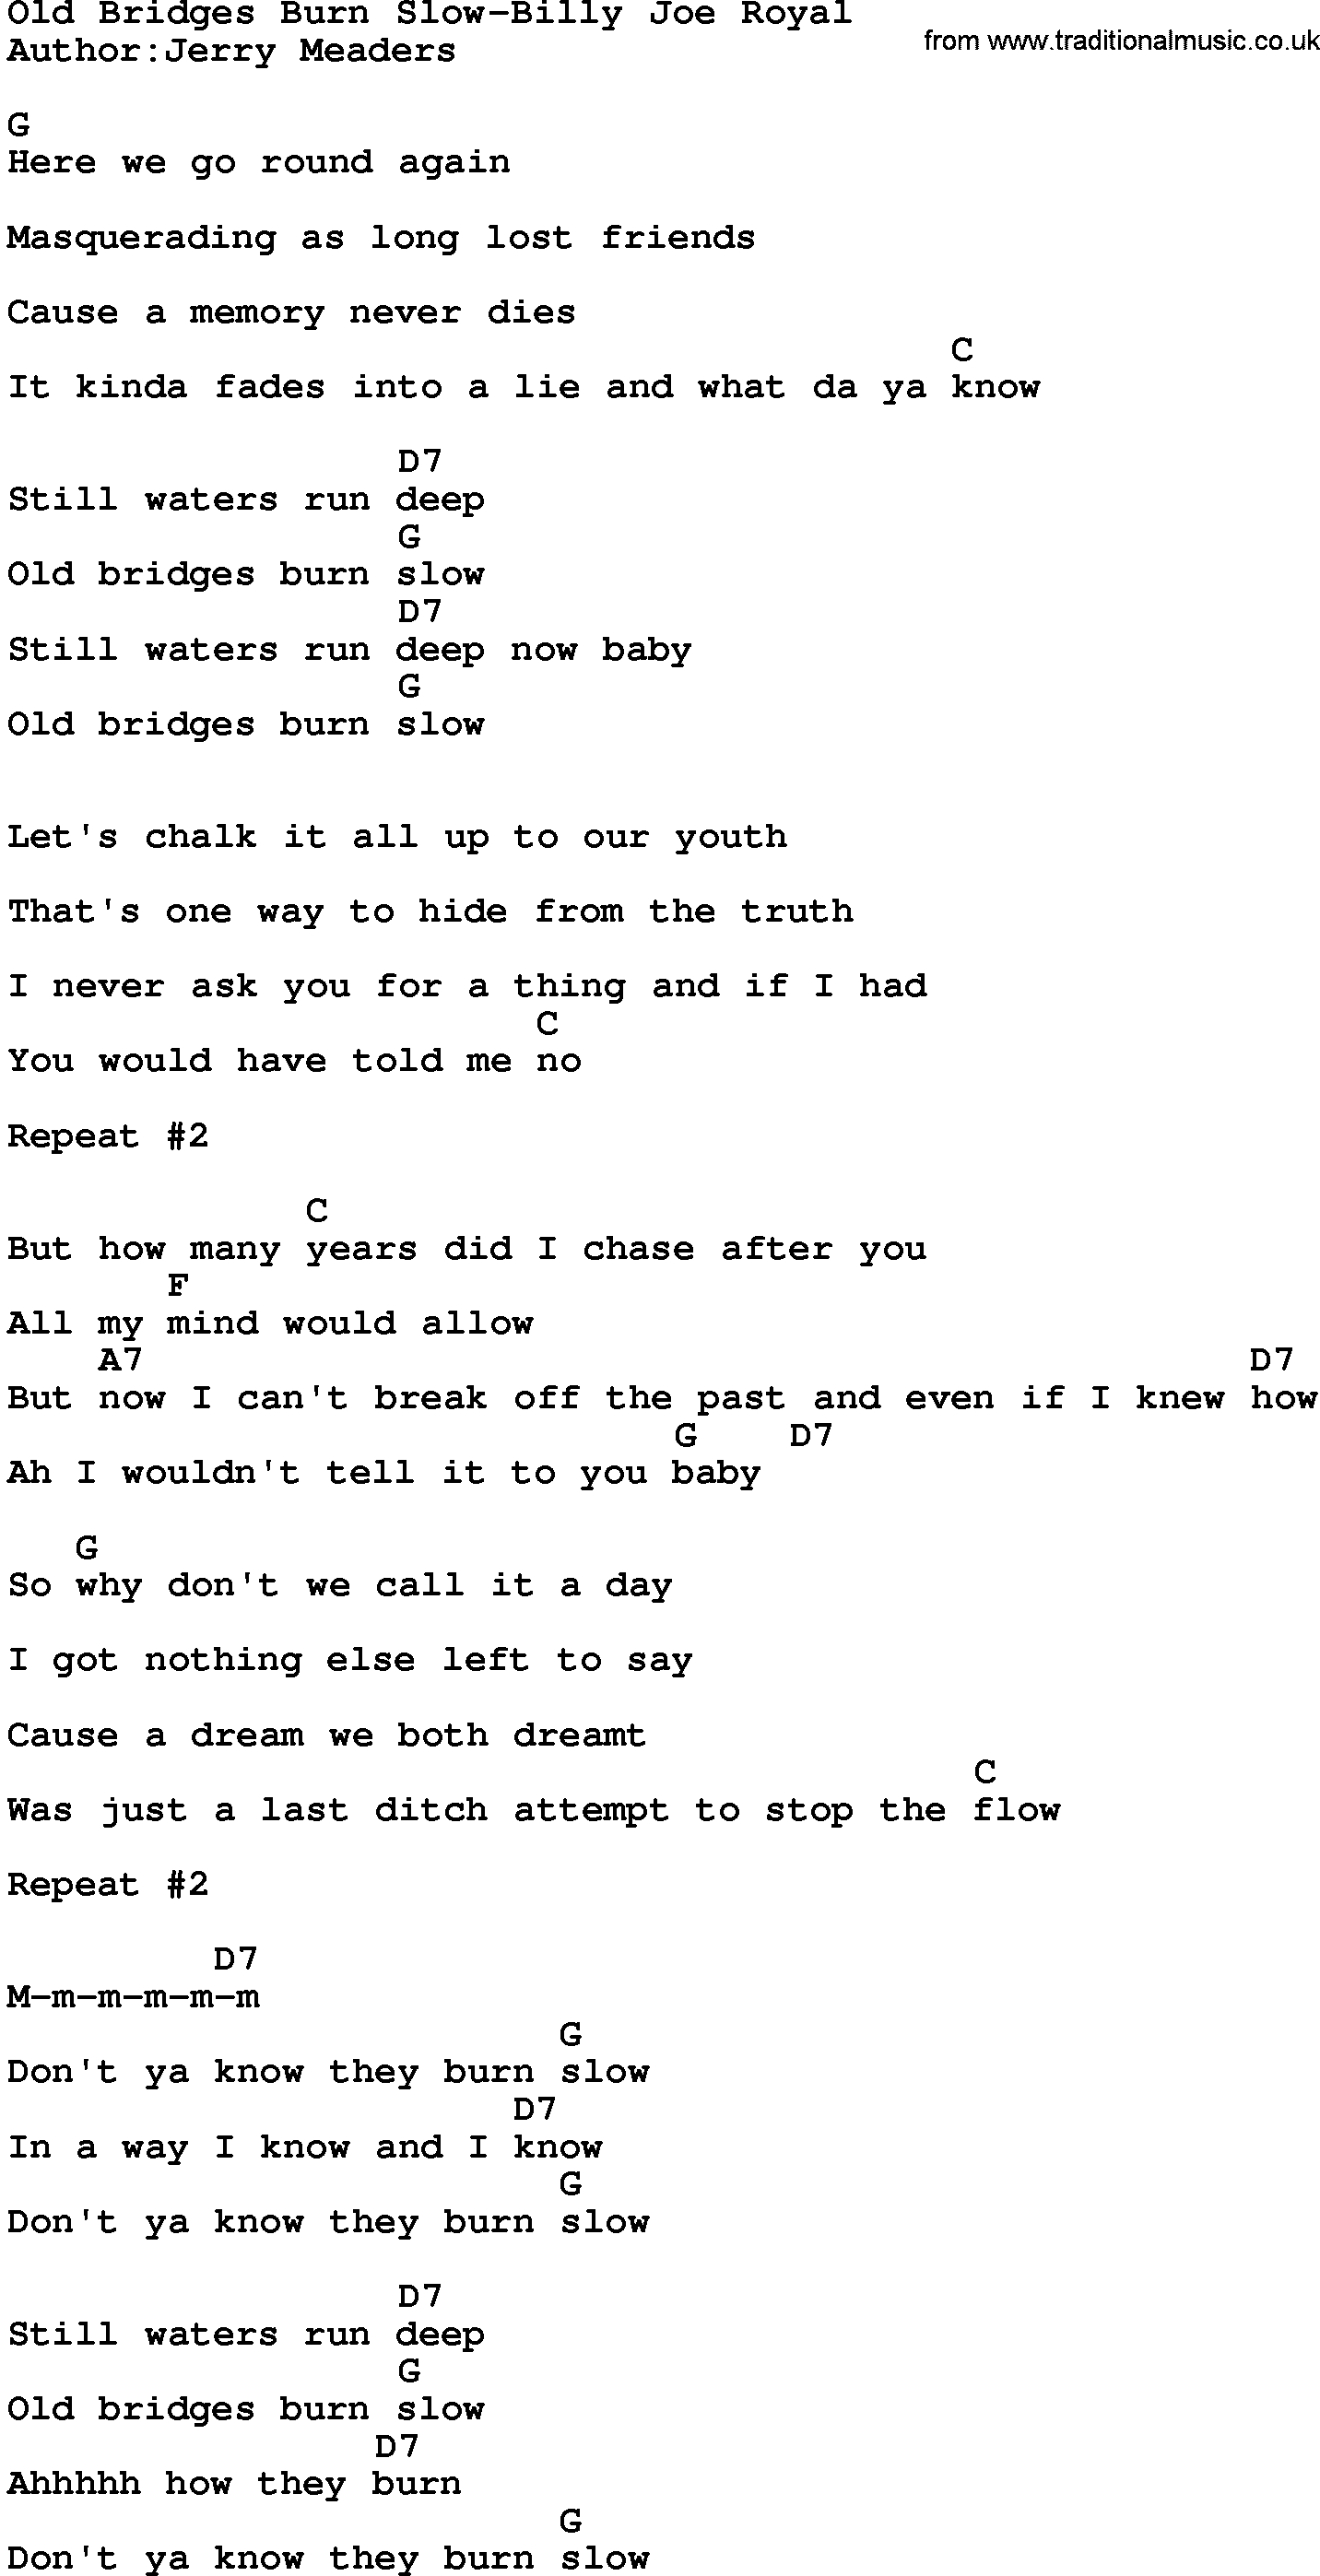 Country music song: Old Bridges Burn Slow-Billy Joe Royal lyrics and chords